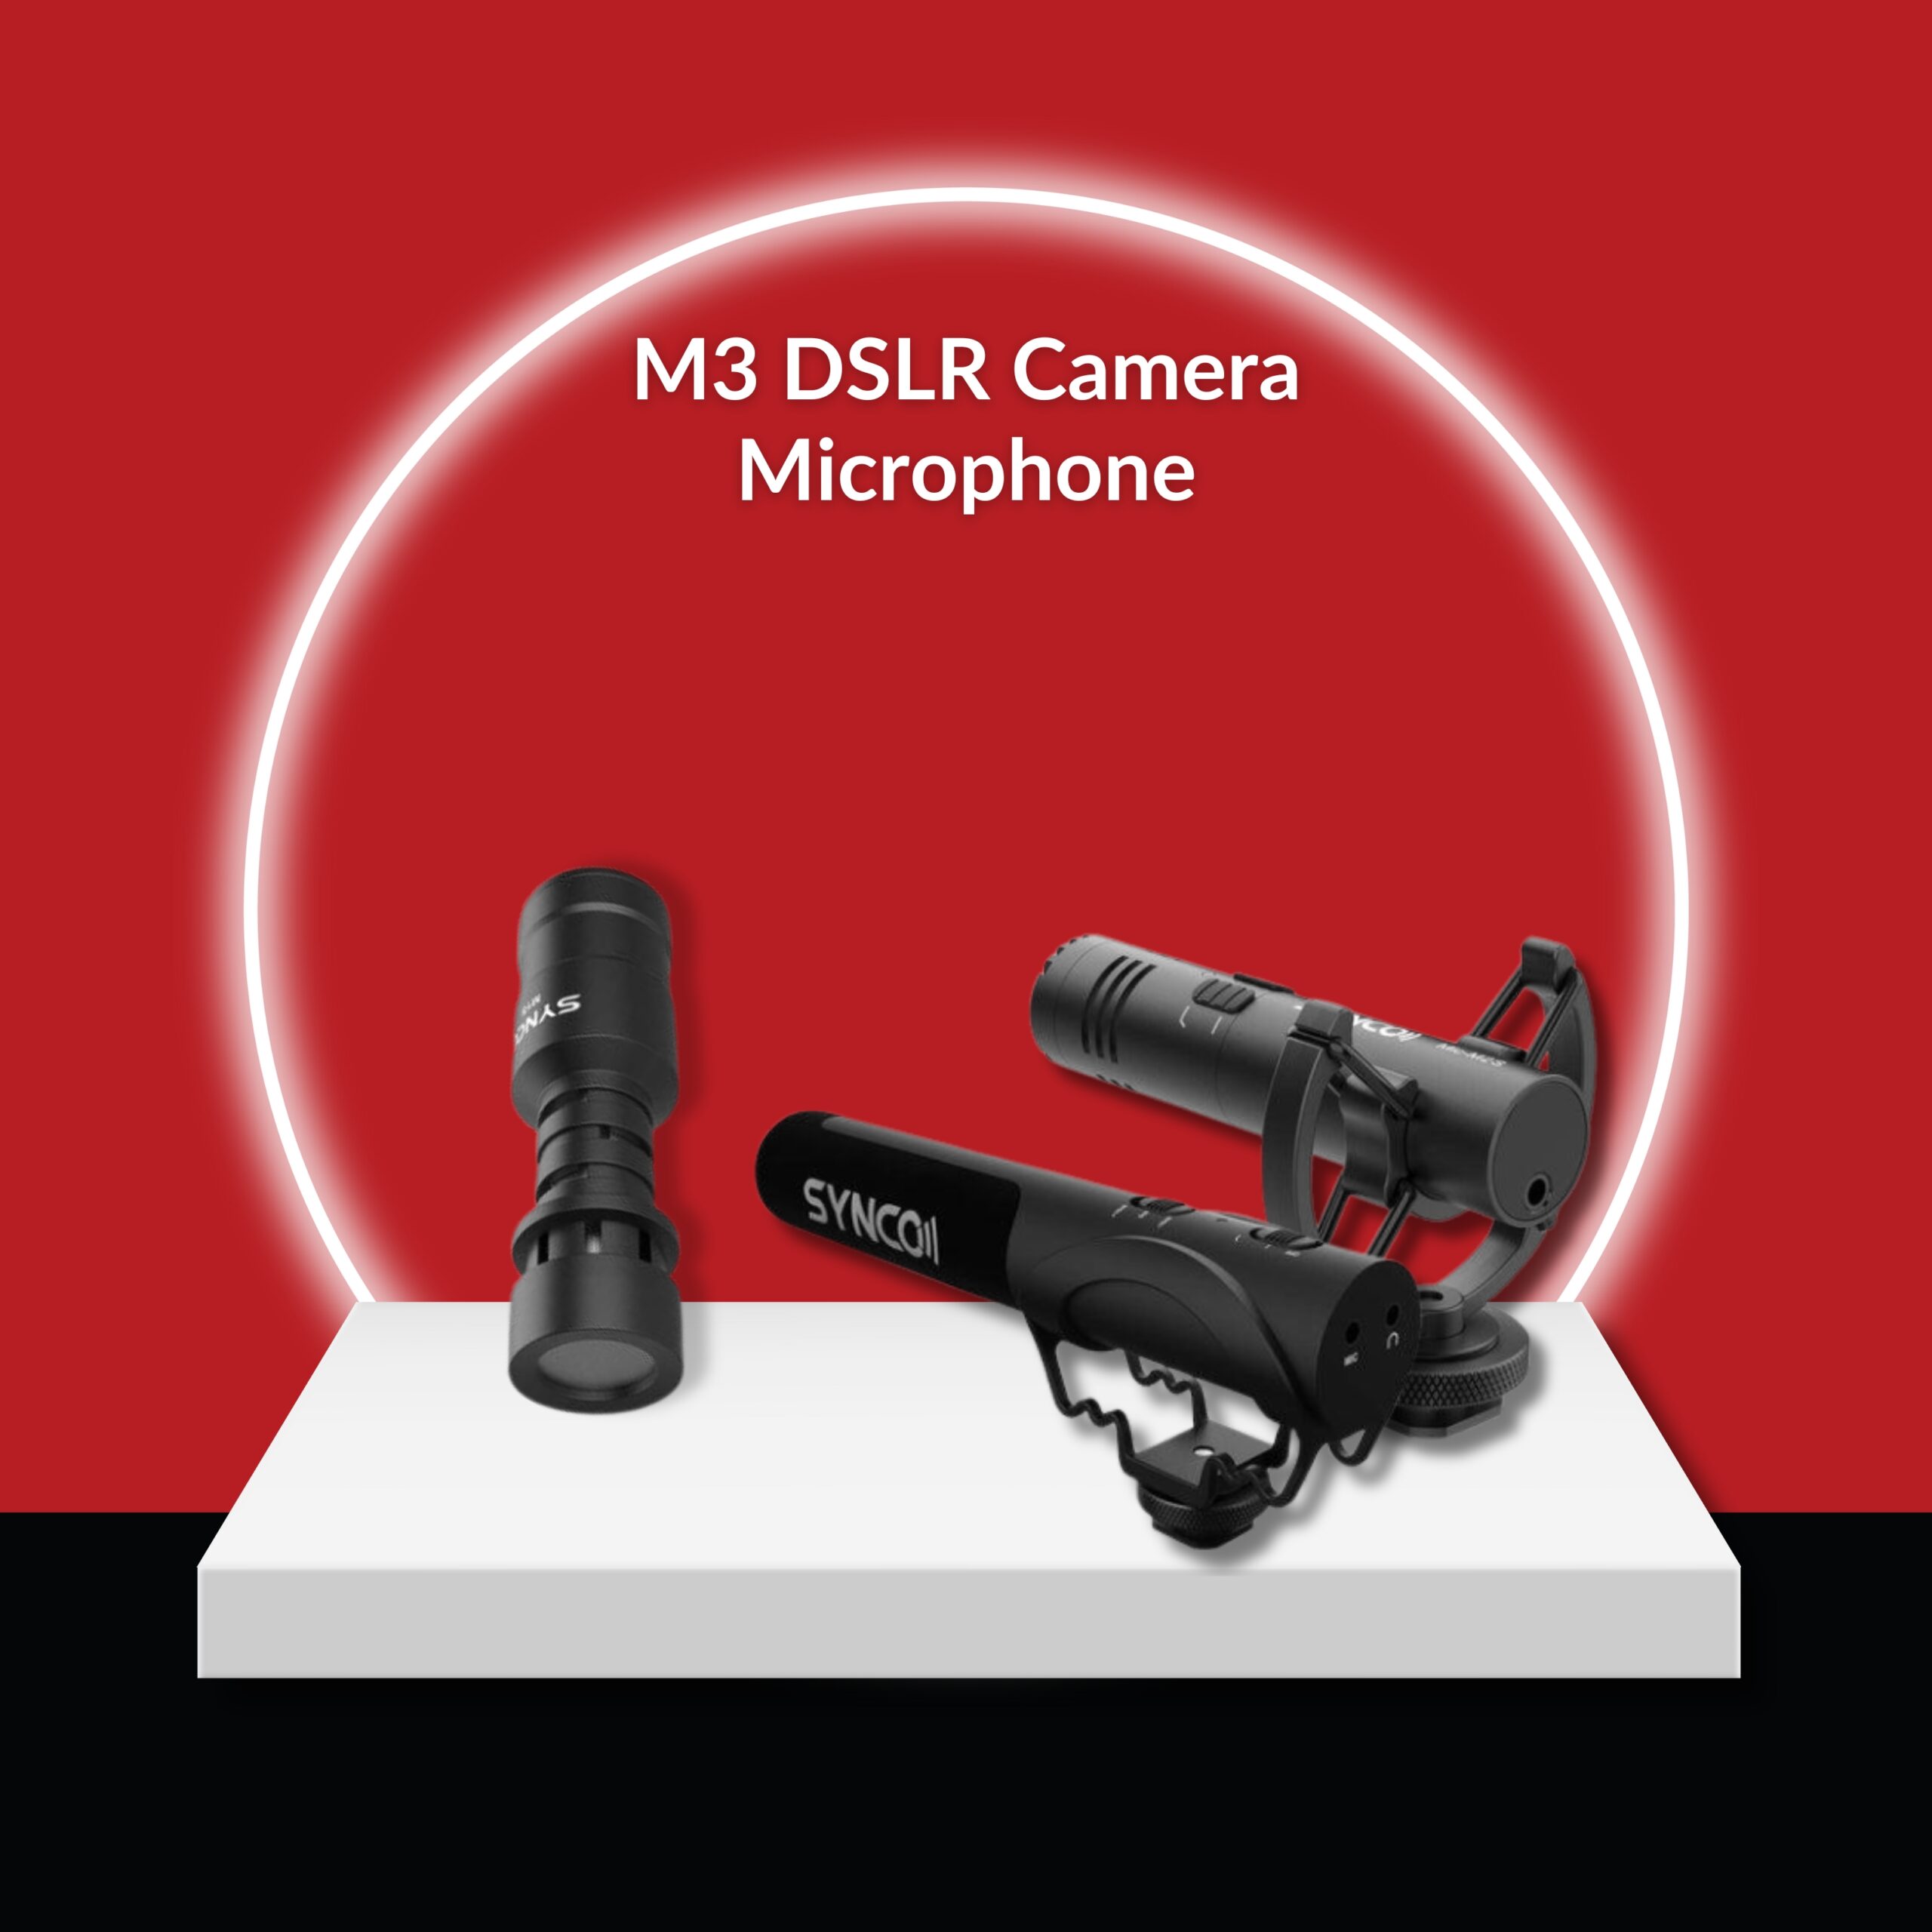 M3 DSLR Camera